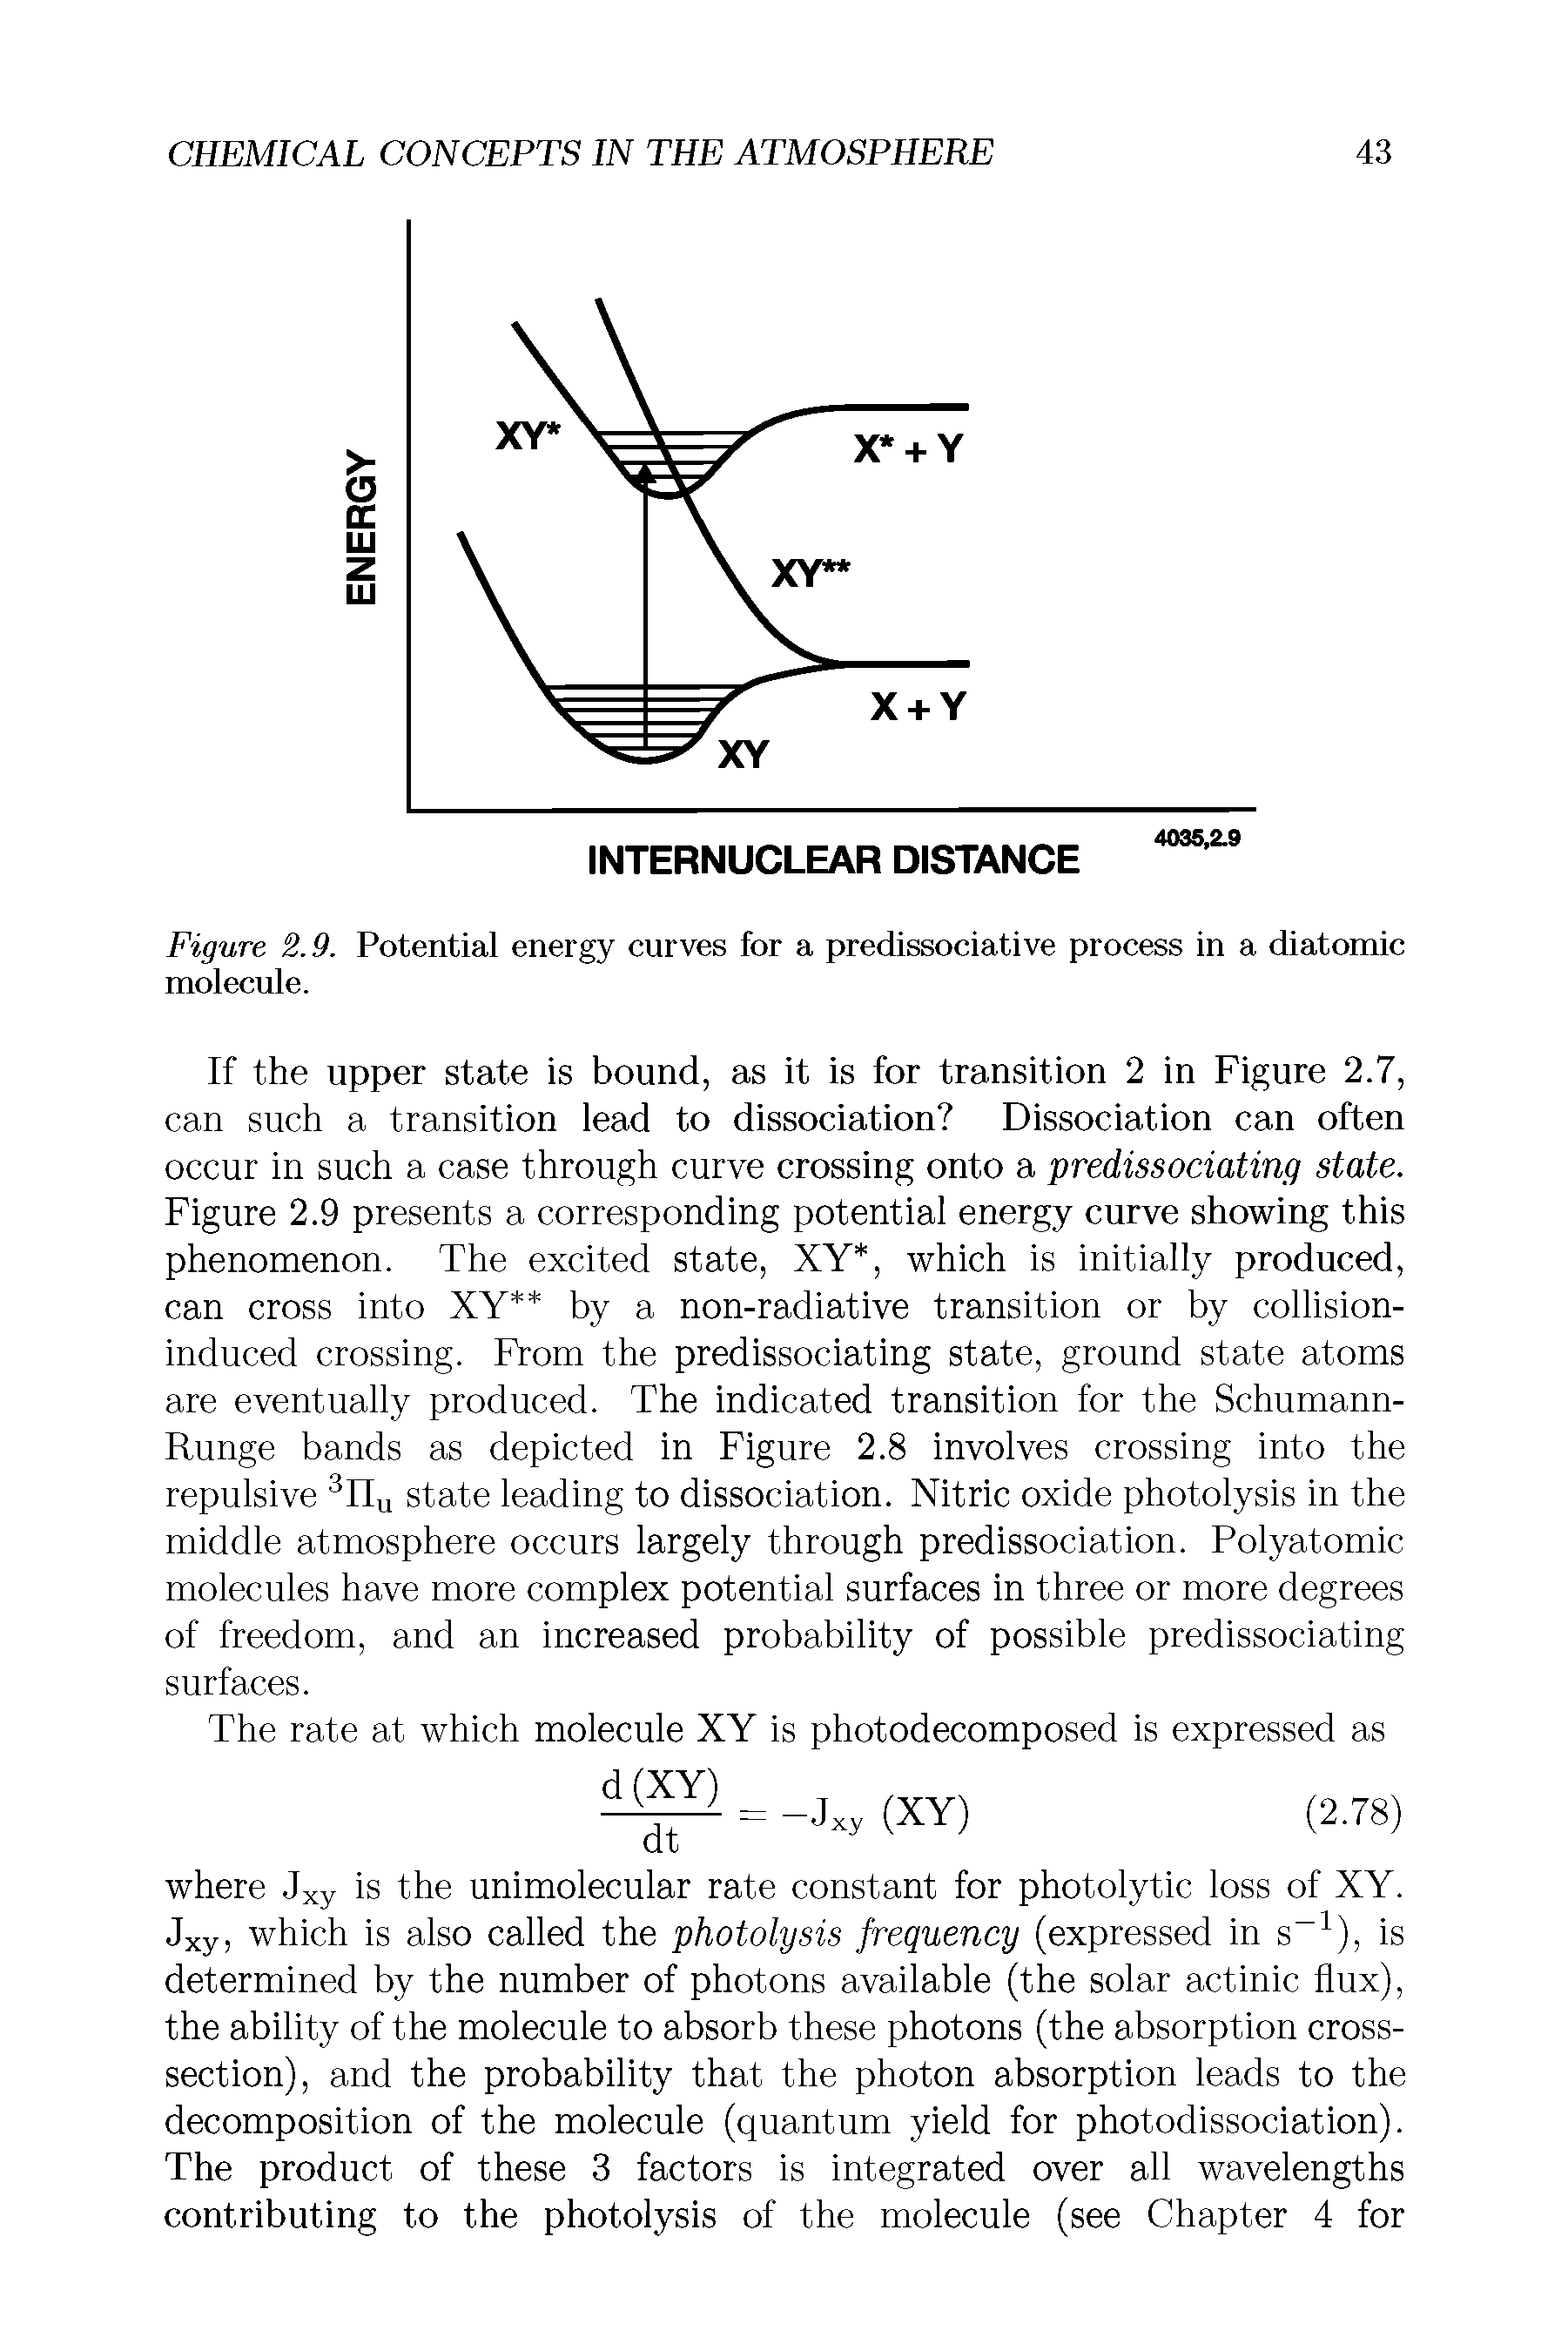 Figure 2.9. Potential energy curves for a predissociative process in a diatomic molecule.